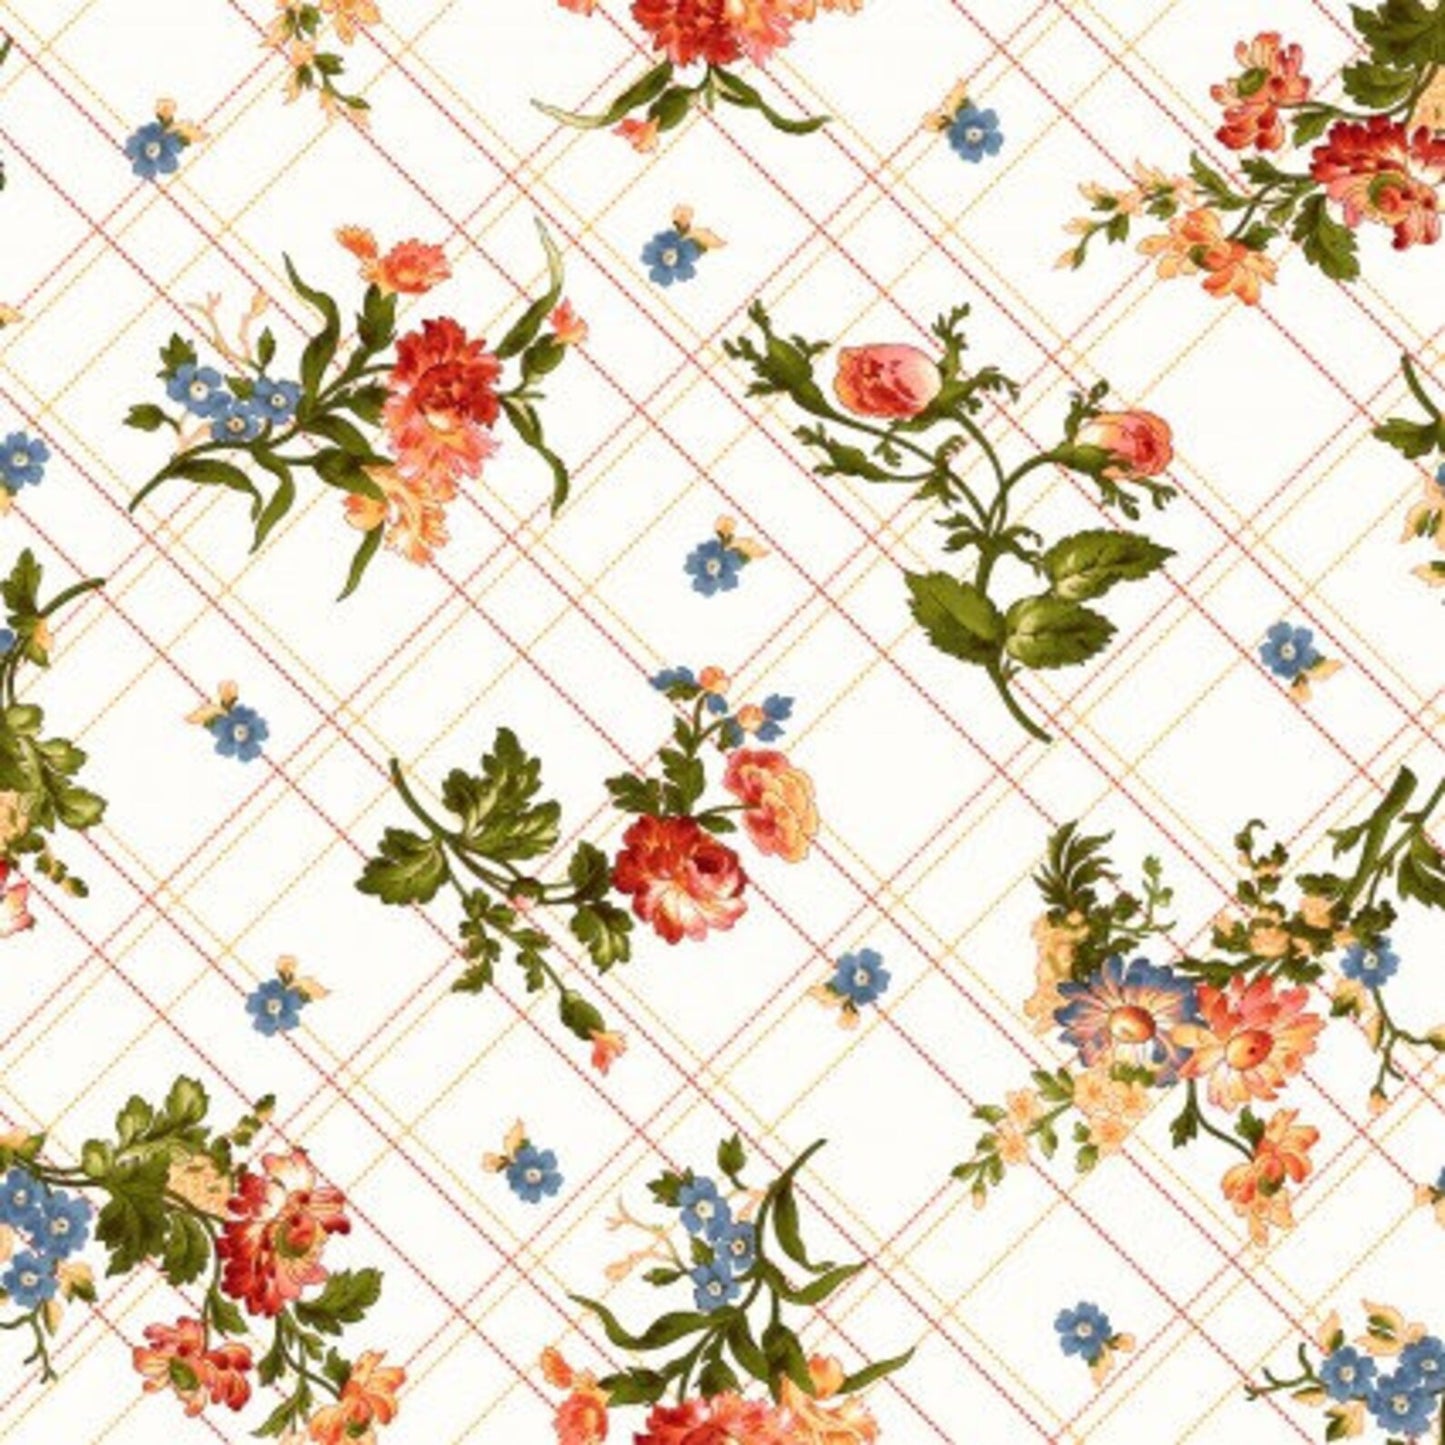 44 x 36 Floral Belle Epoque Bias Plaid Floral on Cream 100% Cotton All Over Print